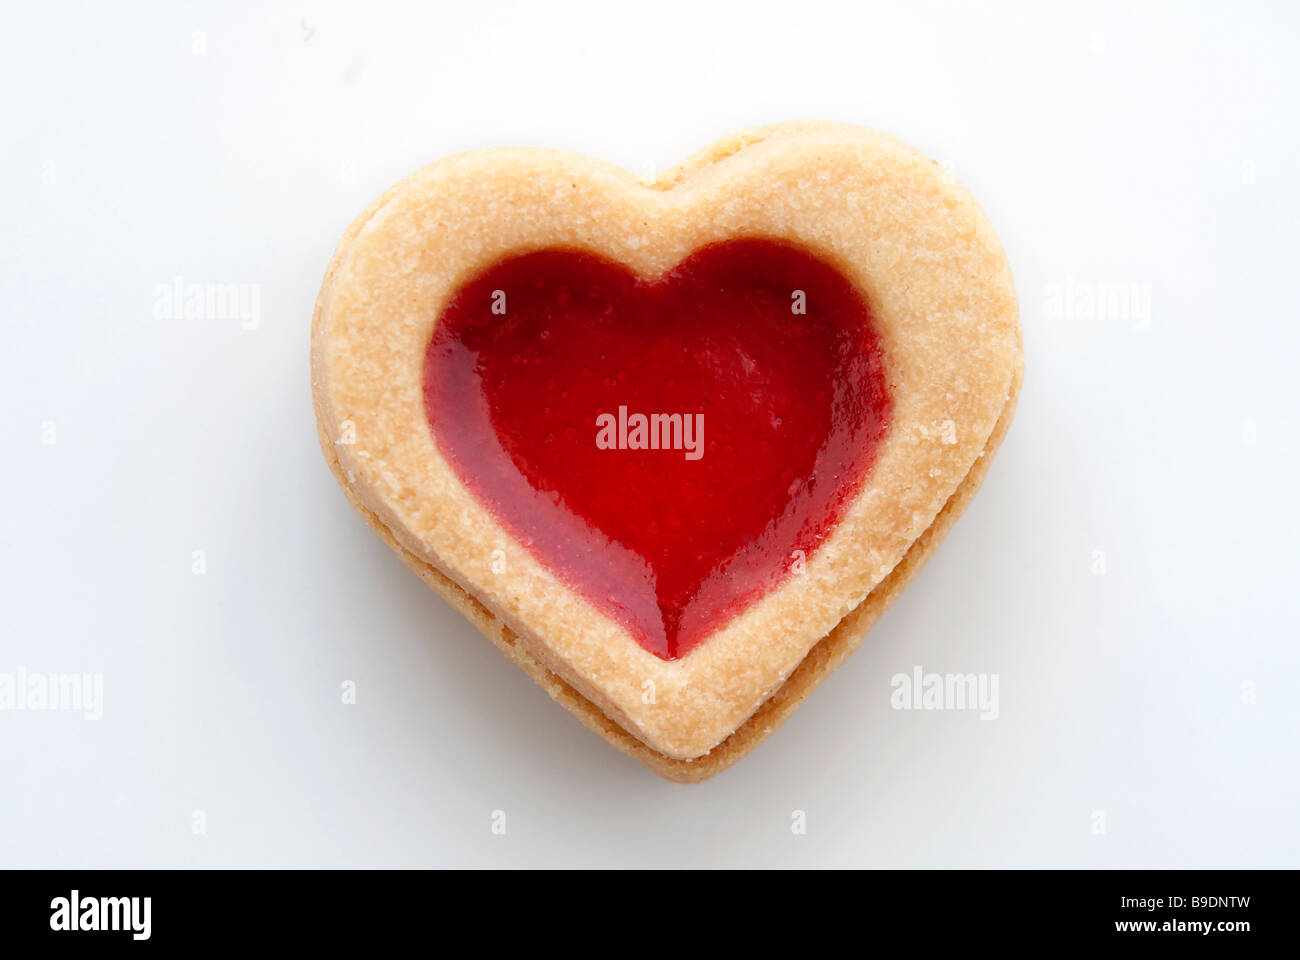 Heart shaped jam tart Stock Photo